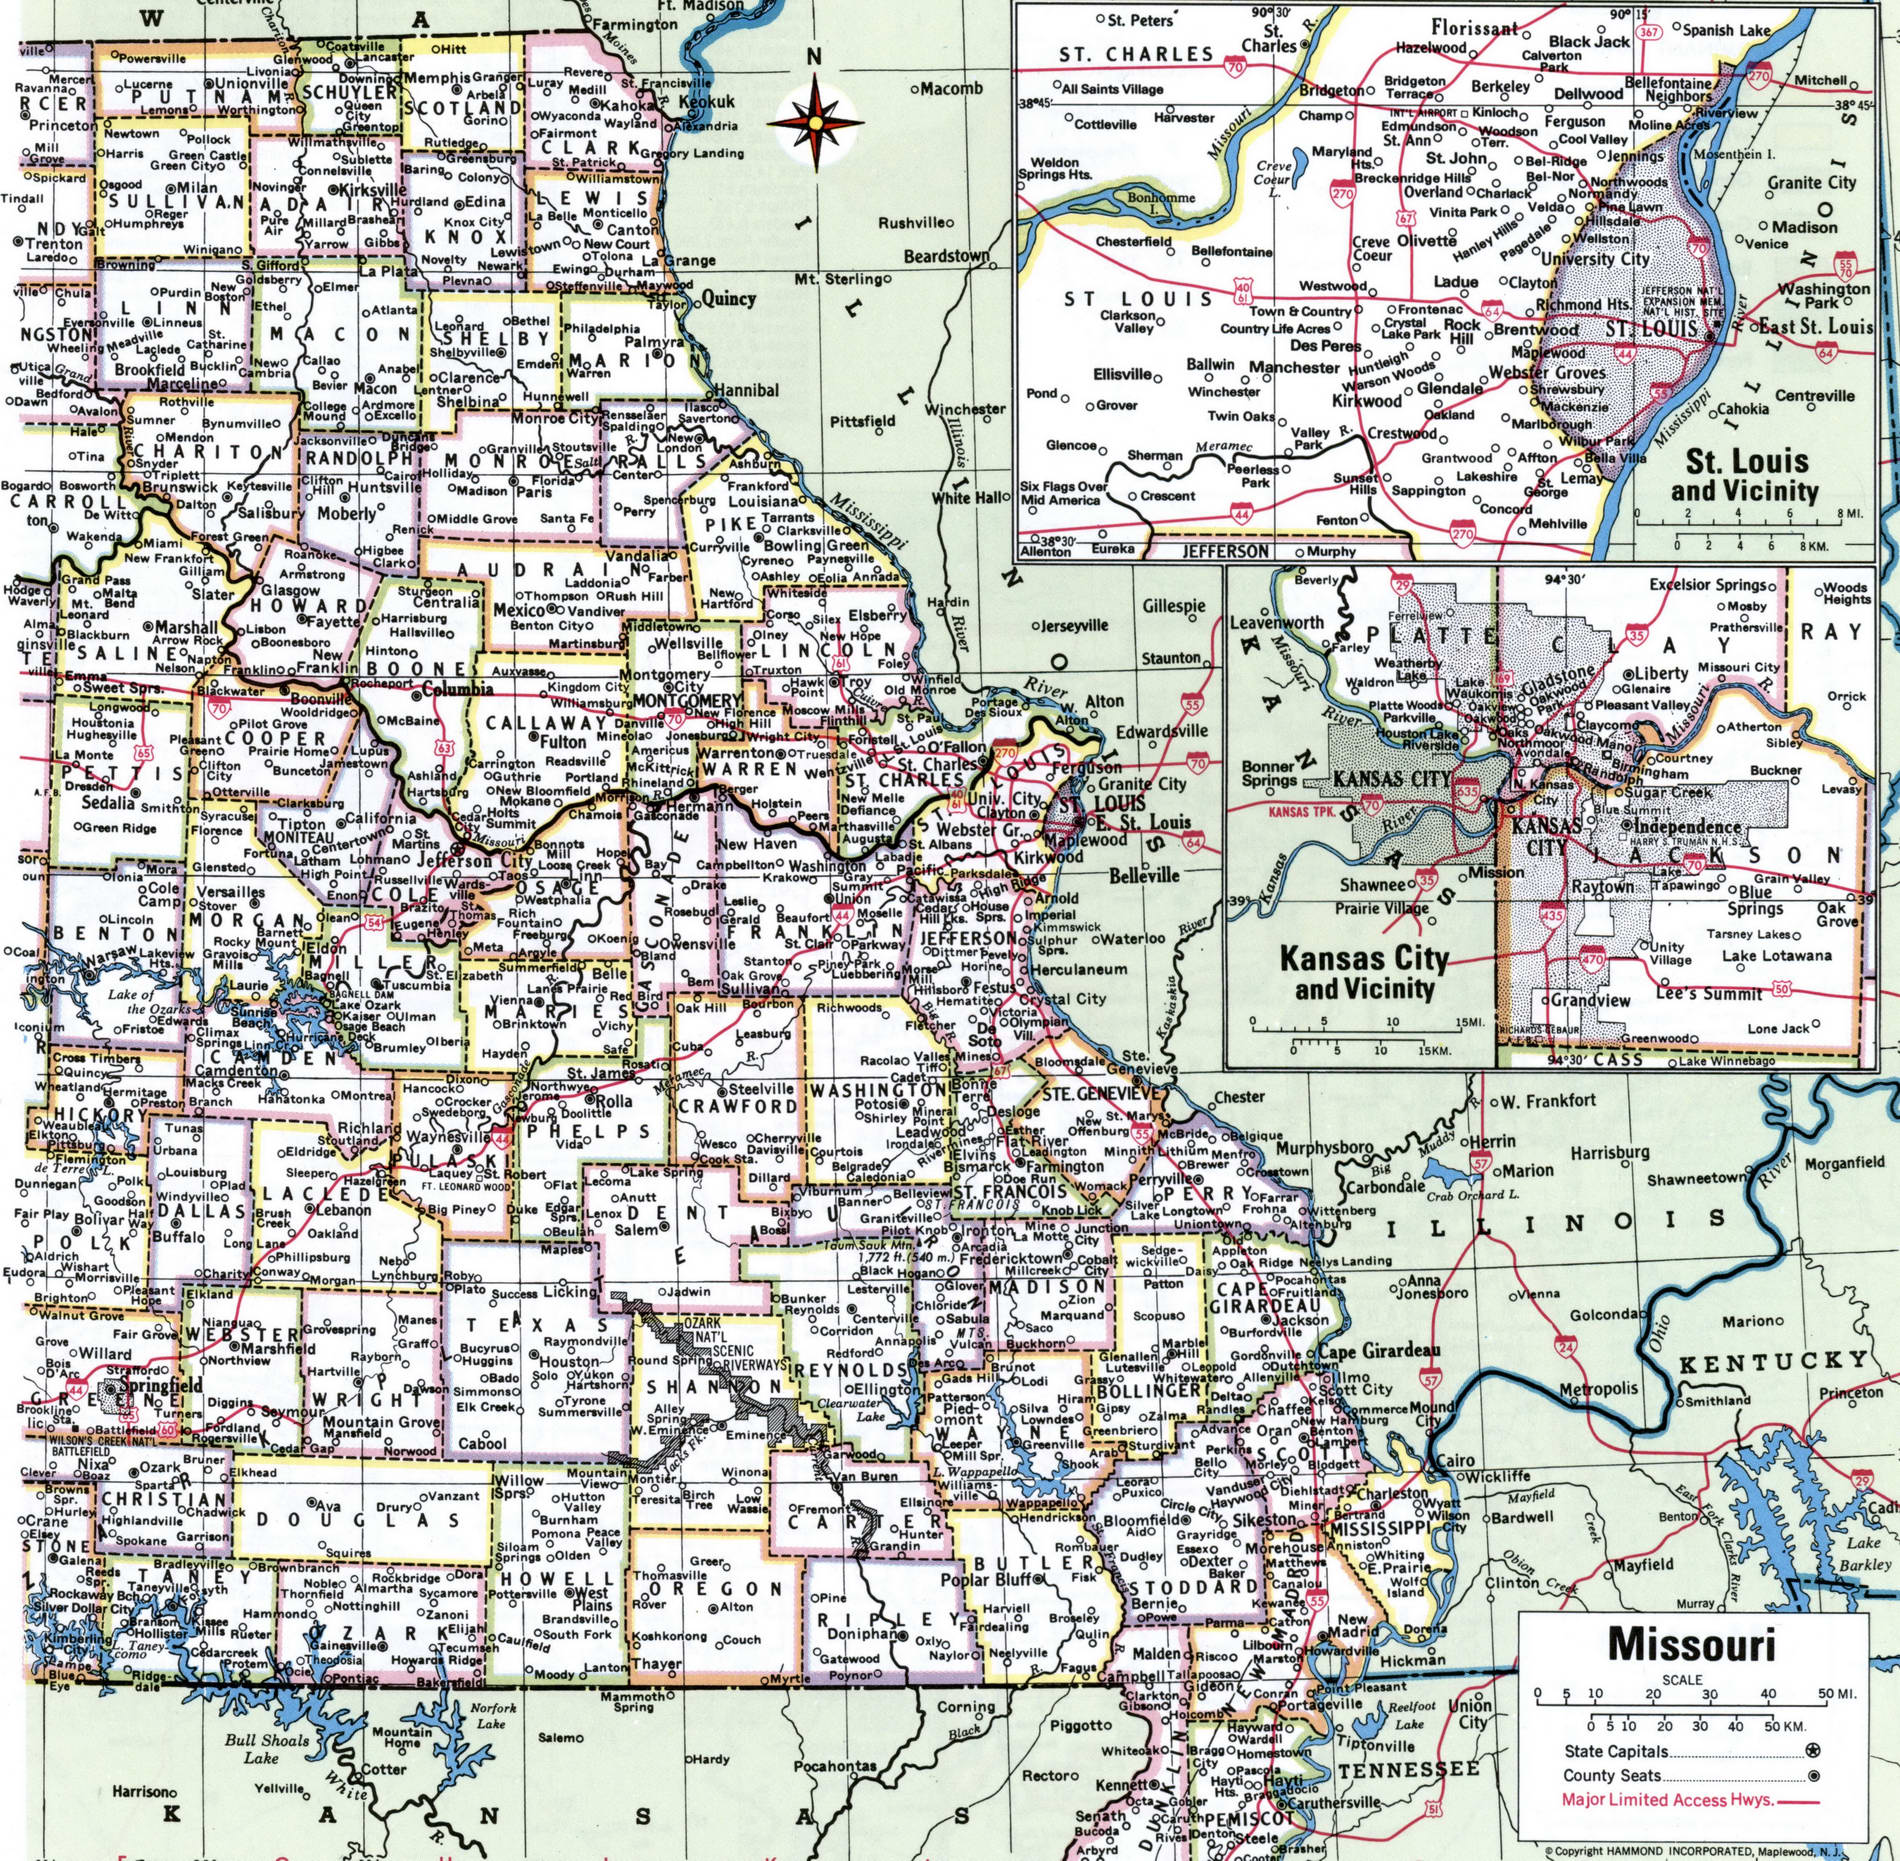 Missouri state counties map